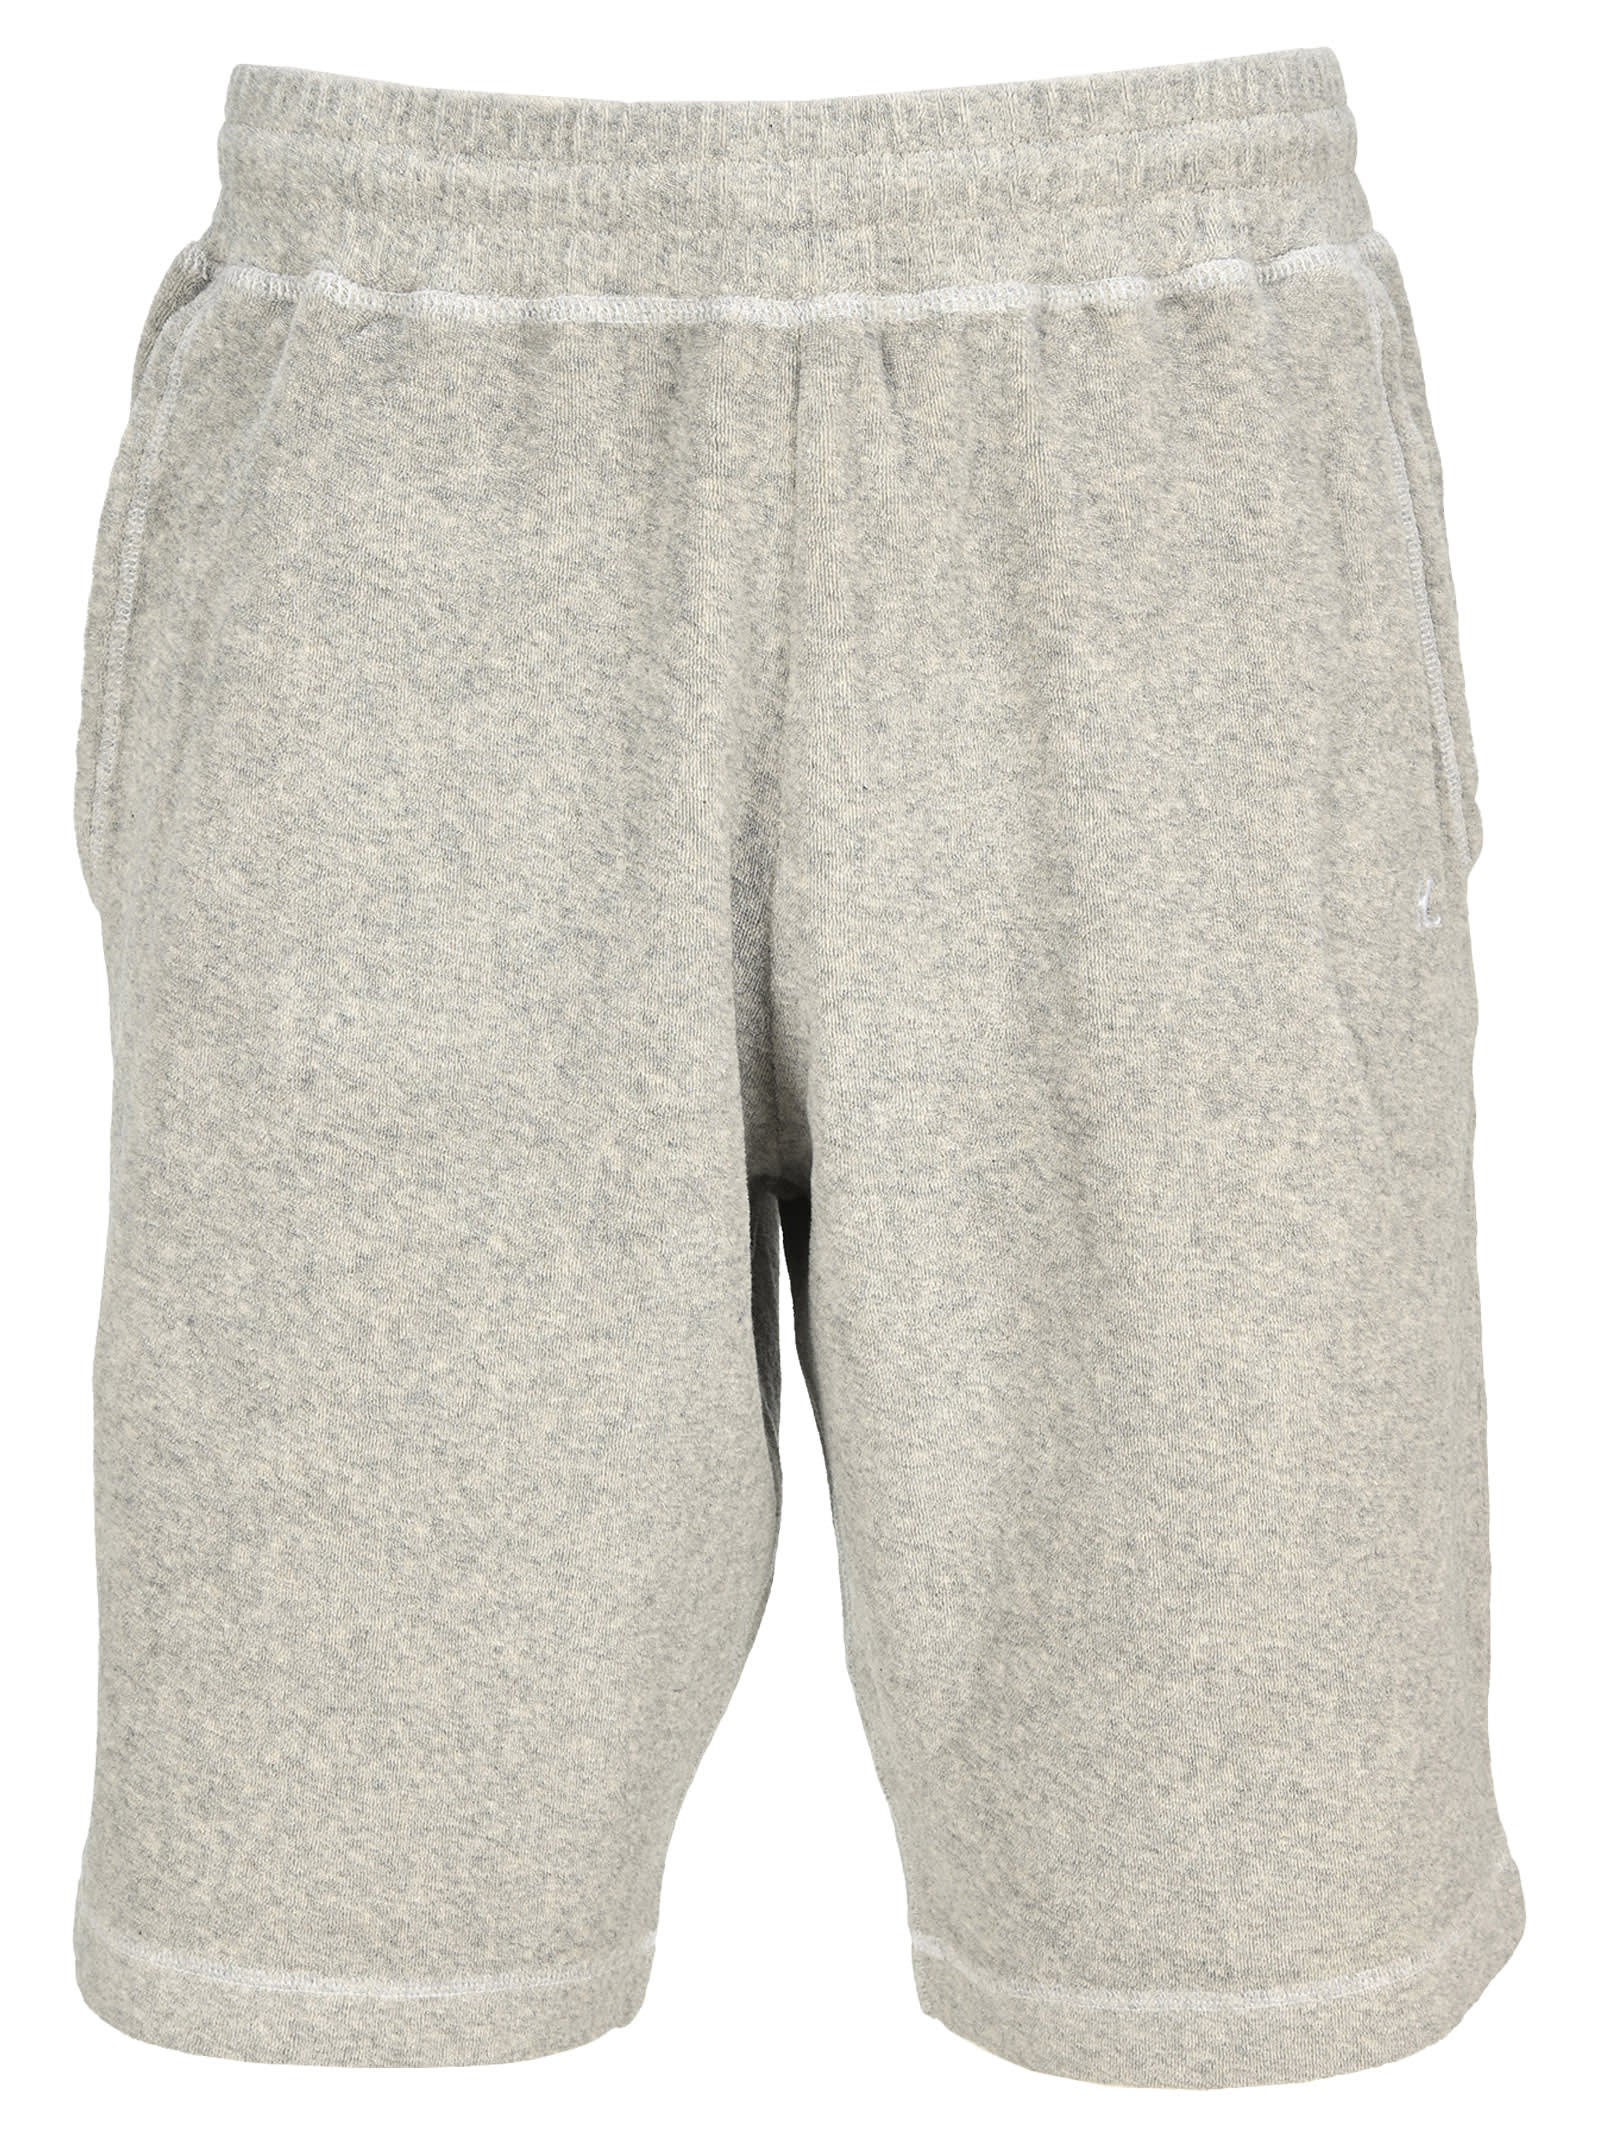 Helmut Lang Towel Shorts